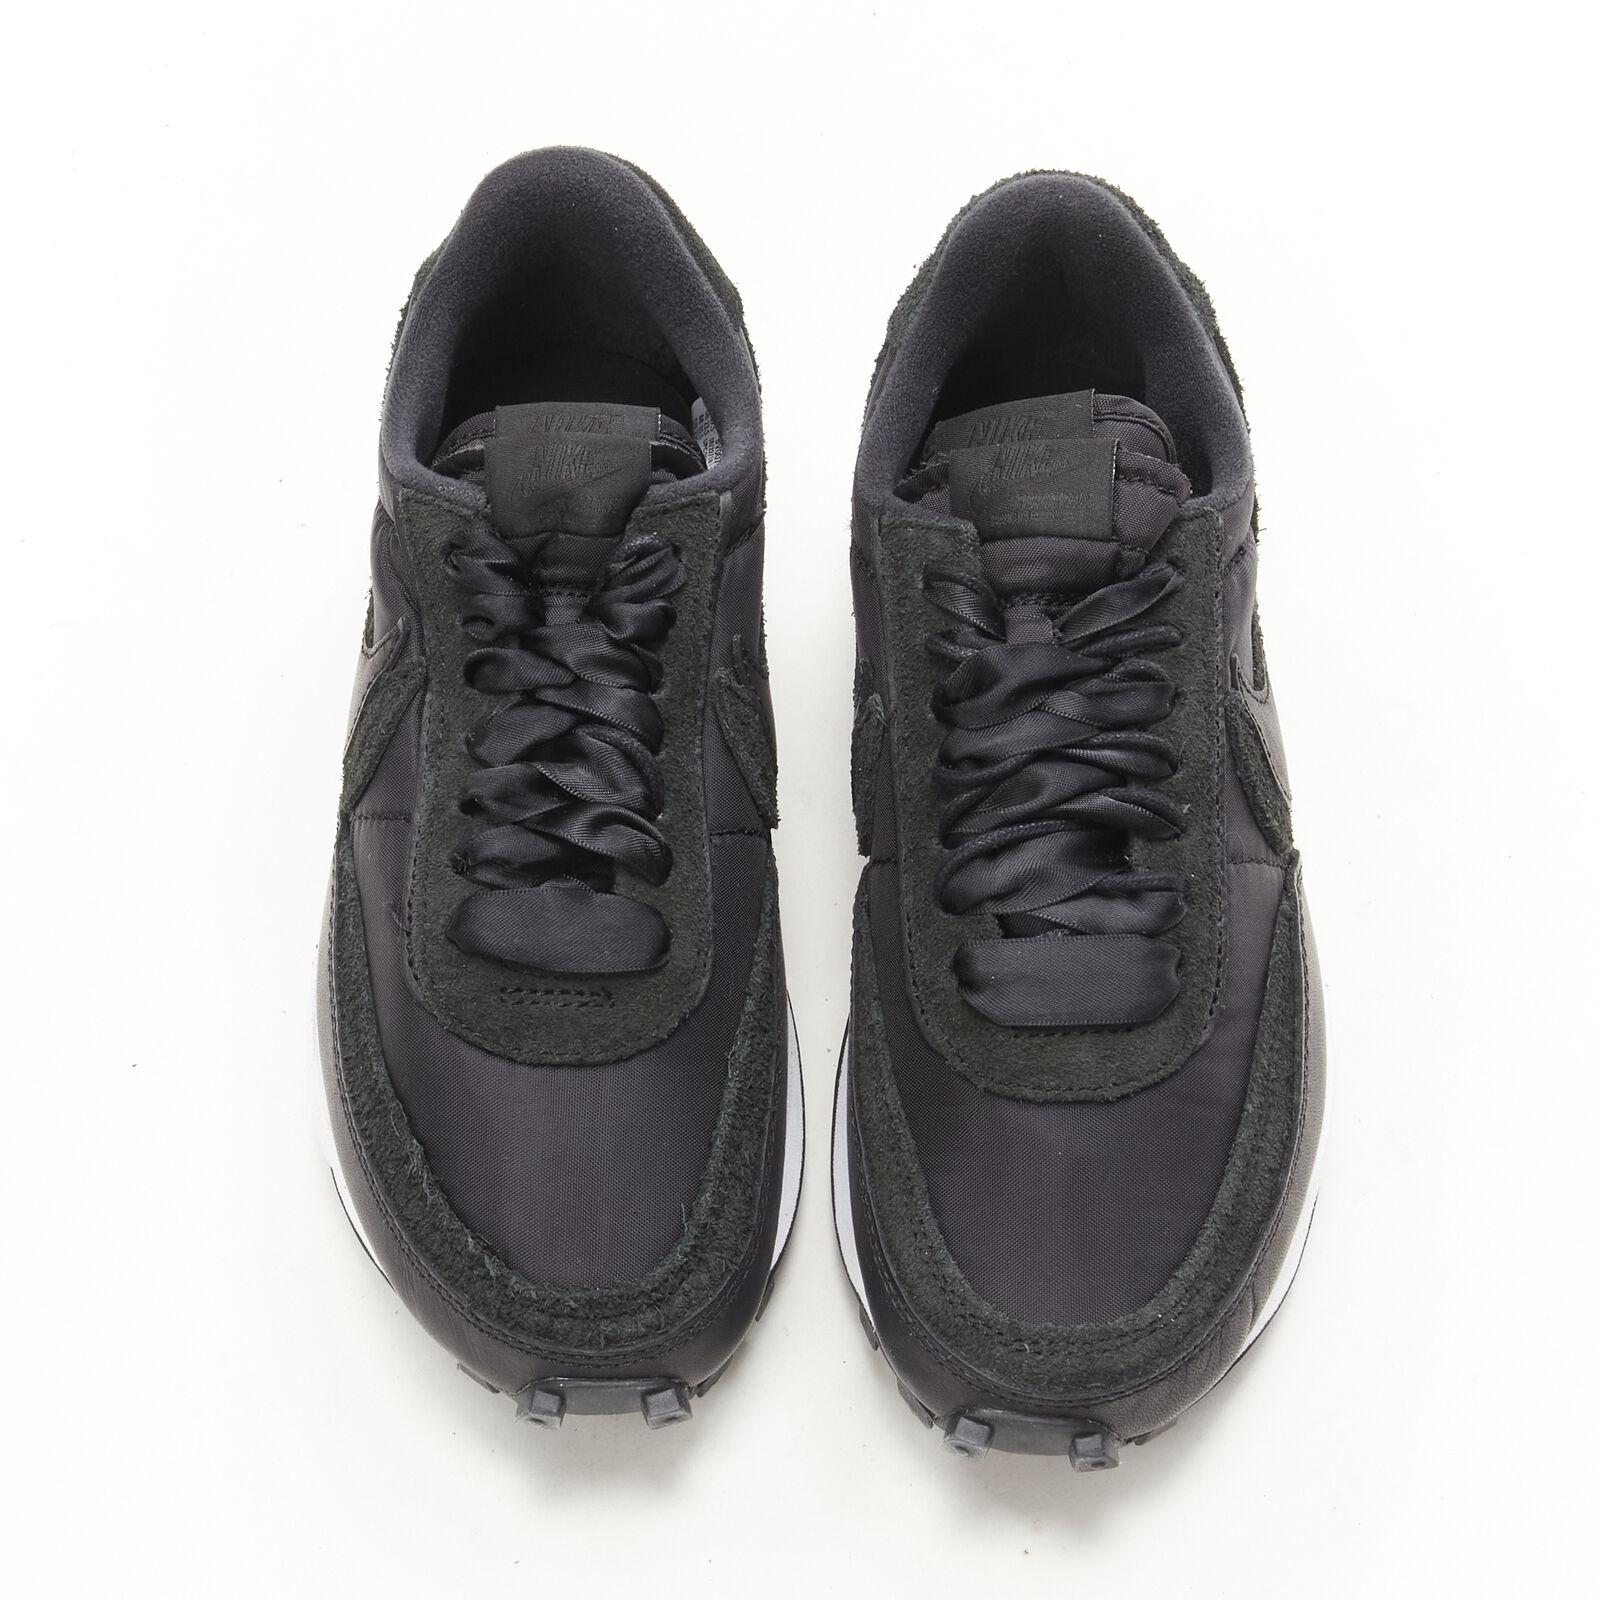 Black NIKE SACAI LD Waffle BV0073 002 black white sneaker US5 EU37.5 For Sale